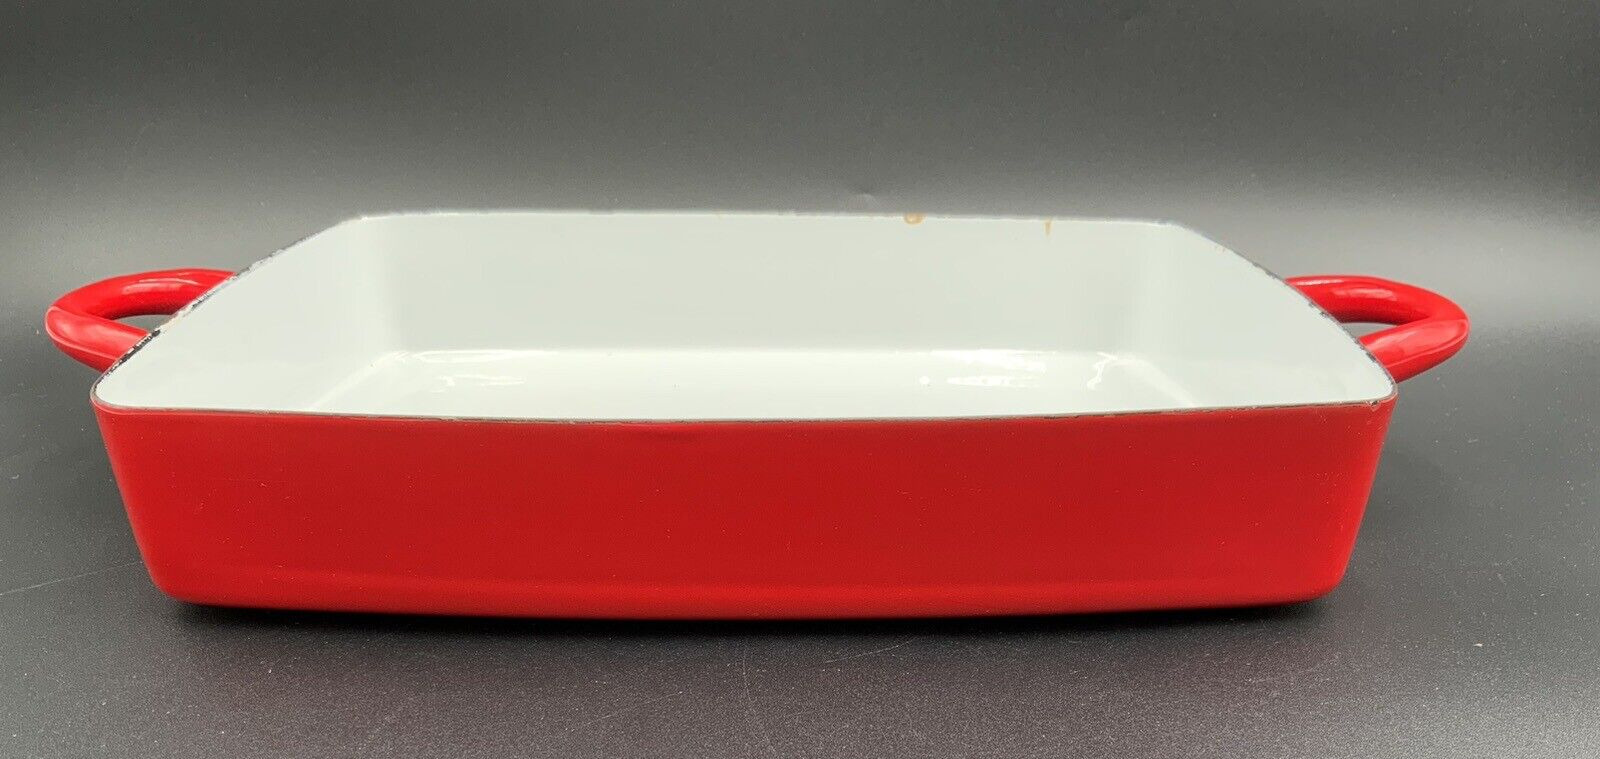 Vtg Dansk Enamel Cookware Large Red and White Baking Dish